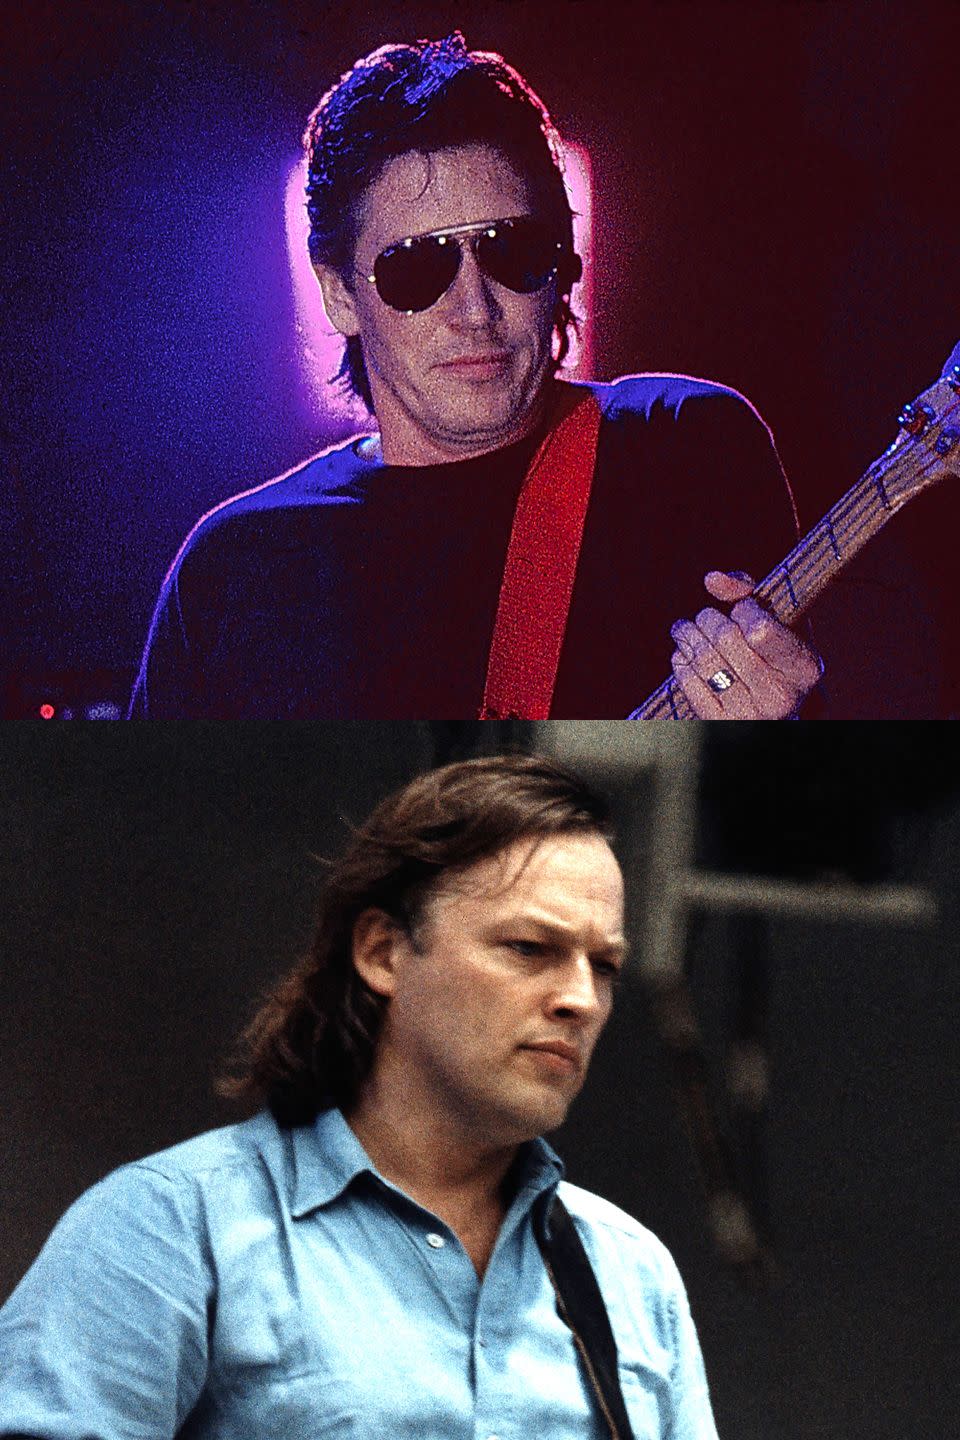 1985: Pink Floyd’s Roger Waters vs. David Gilmour